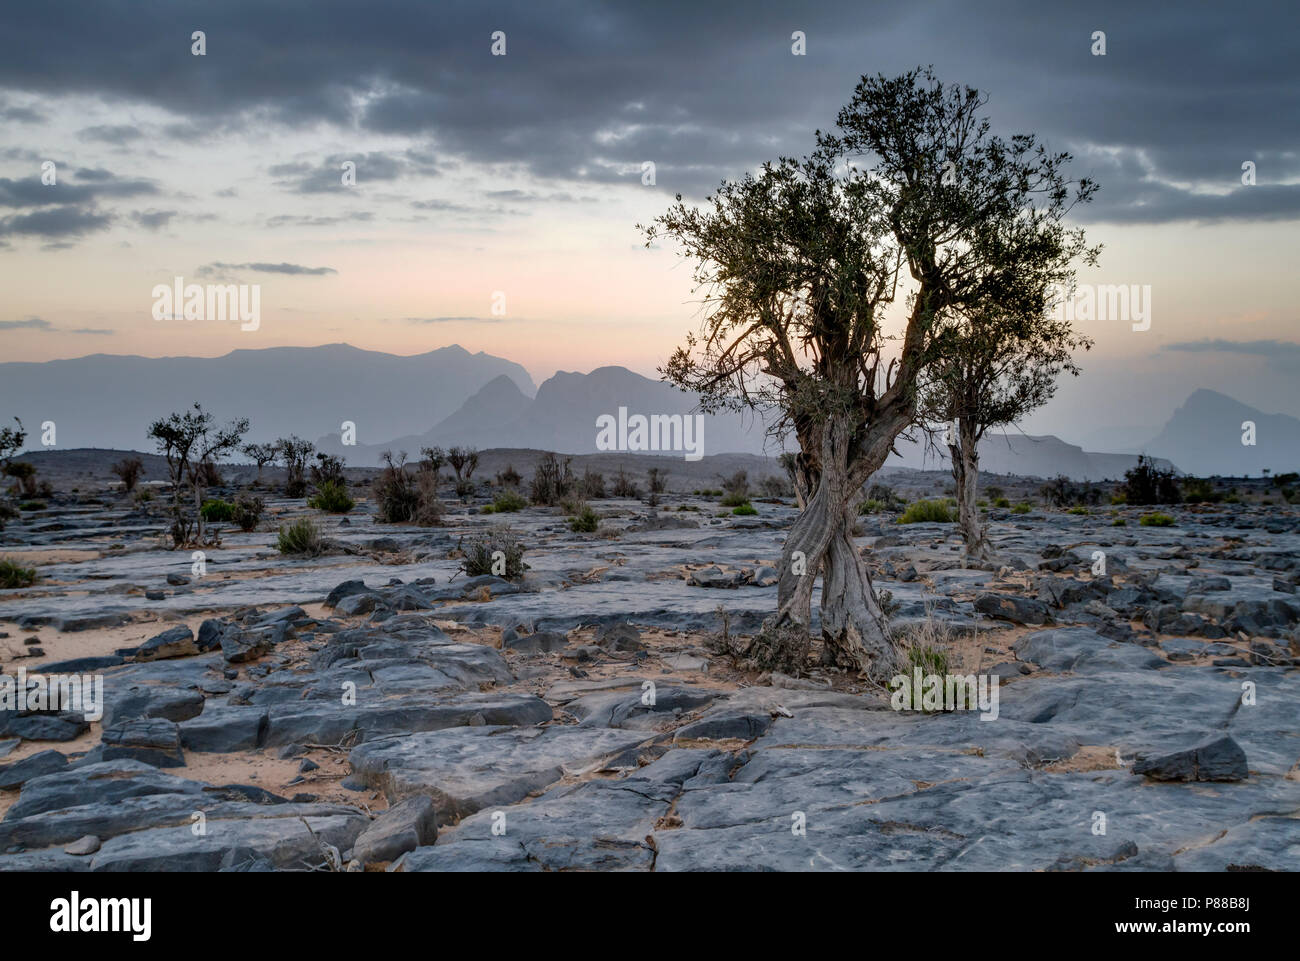 Landscape Jabal Shams, Oman Stock Photo